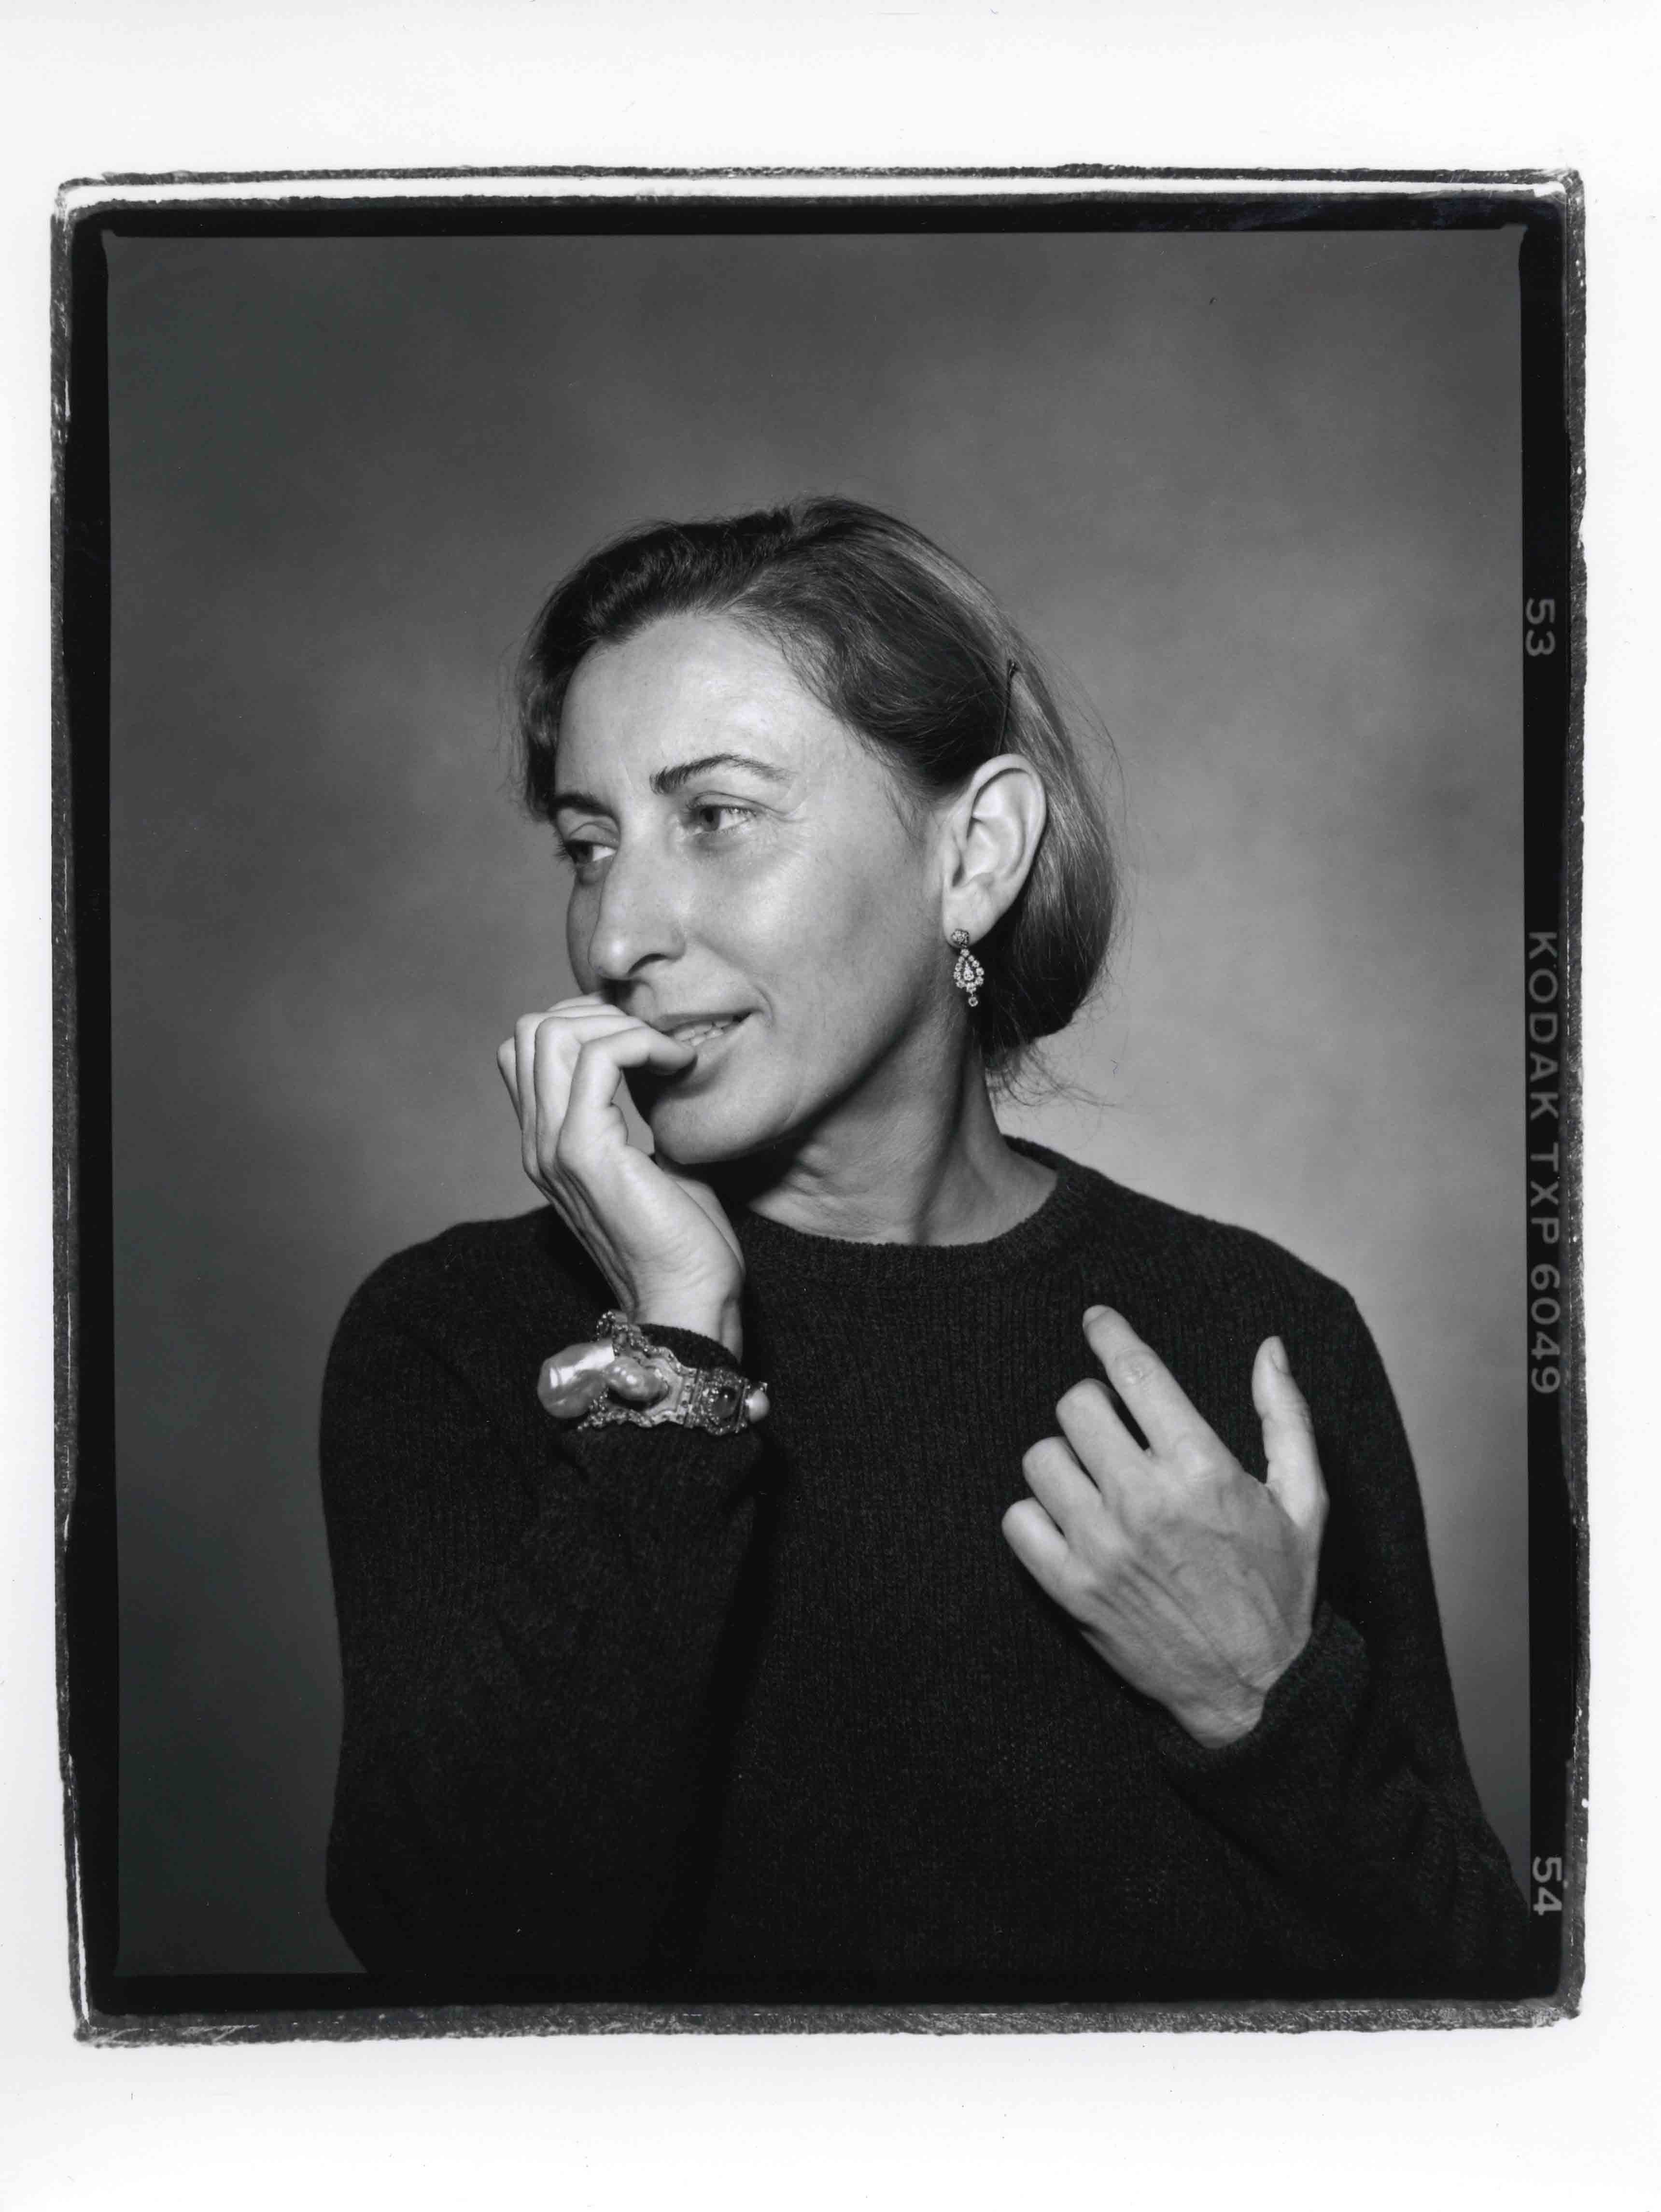 Miuccia Prada photographiée par Guido Harari.